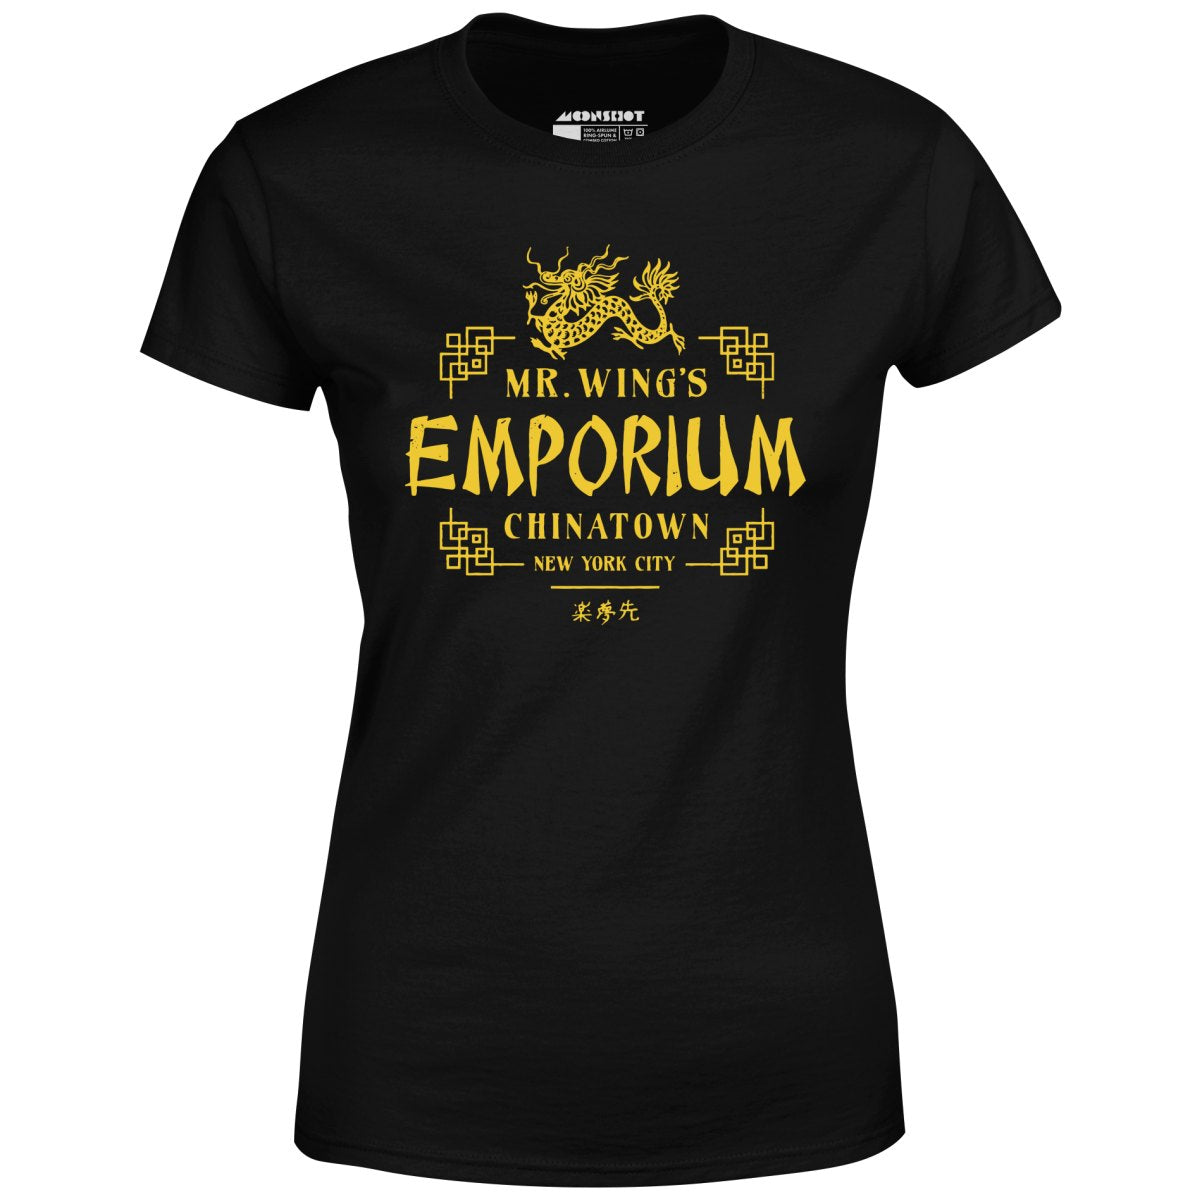 Mr. Wing's Emporium - Women's T-Shirt